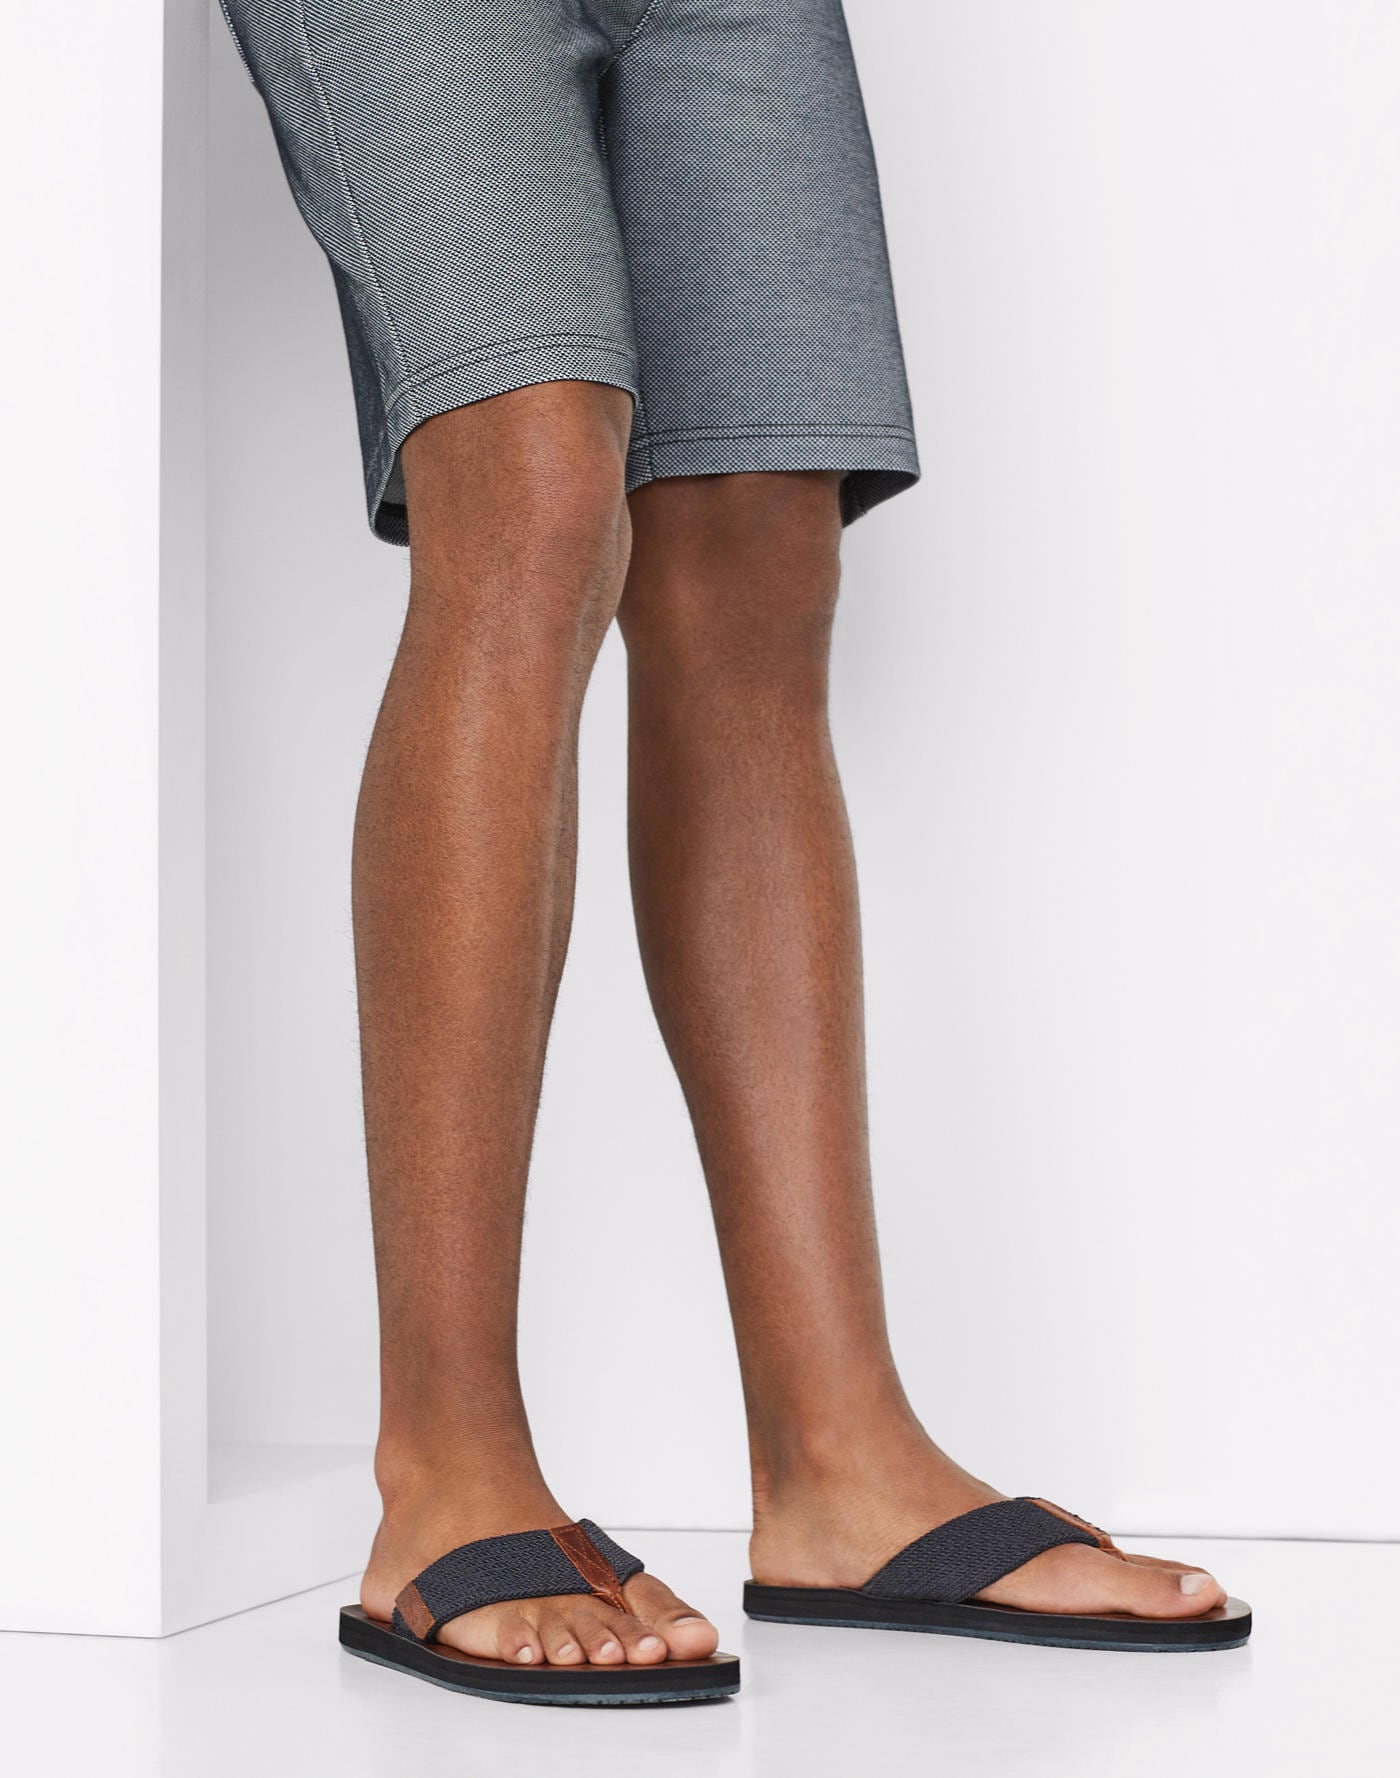 Men's Sandals | Flip Flop & Leather Sandals For Men | ALDO US ...